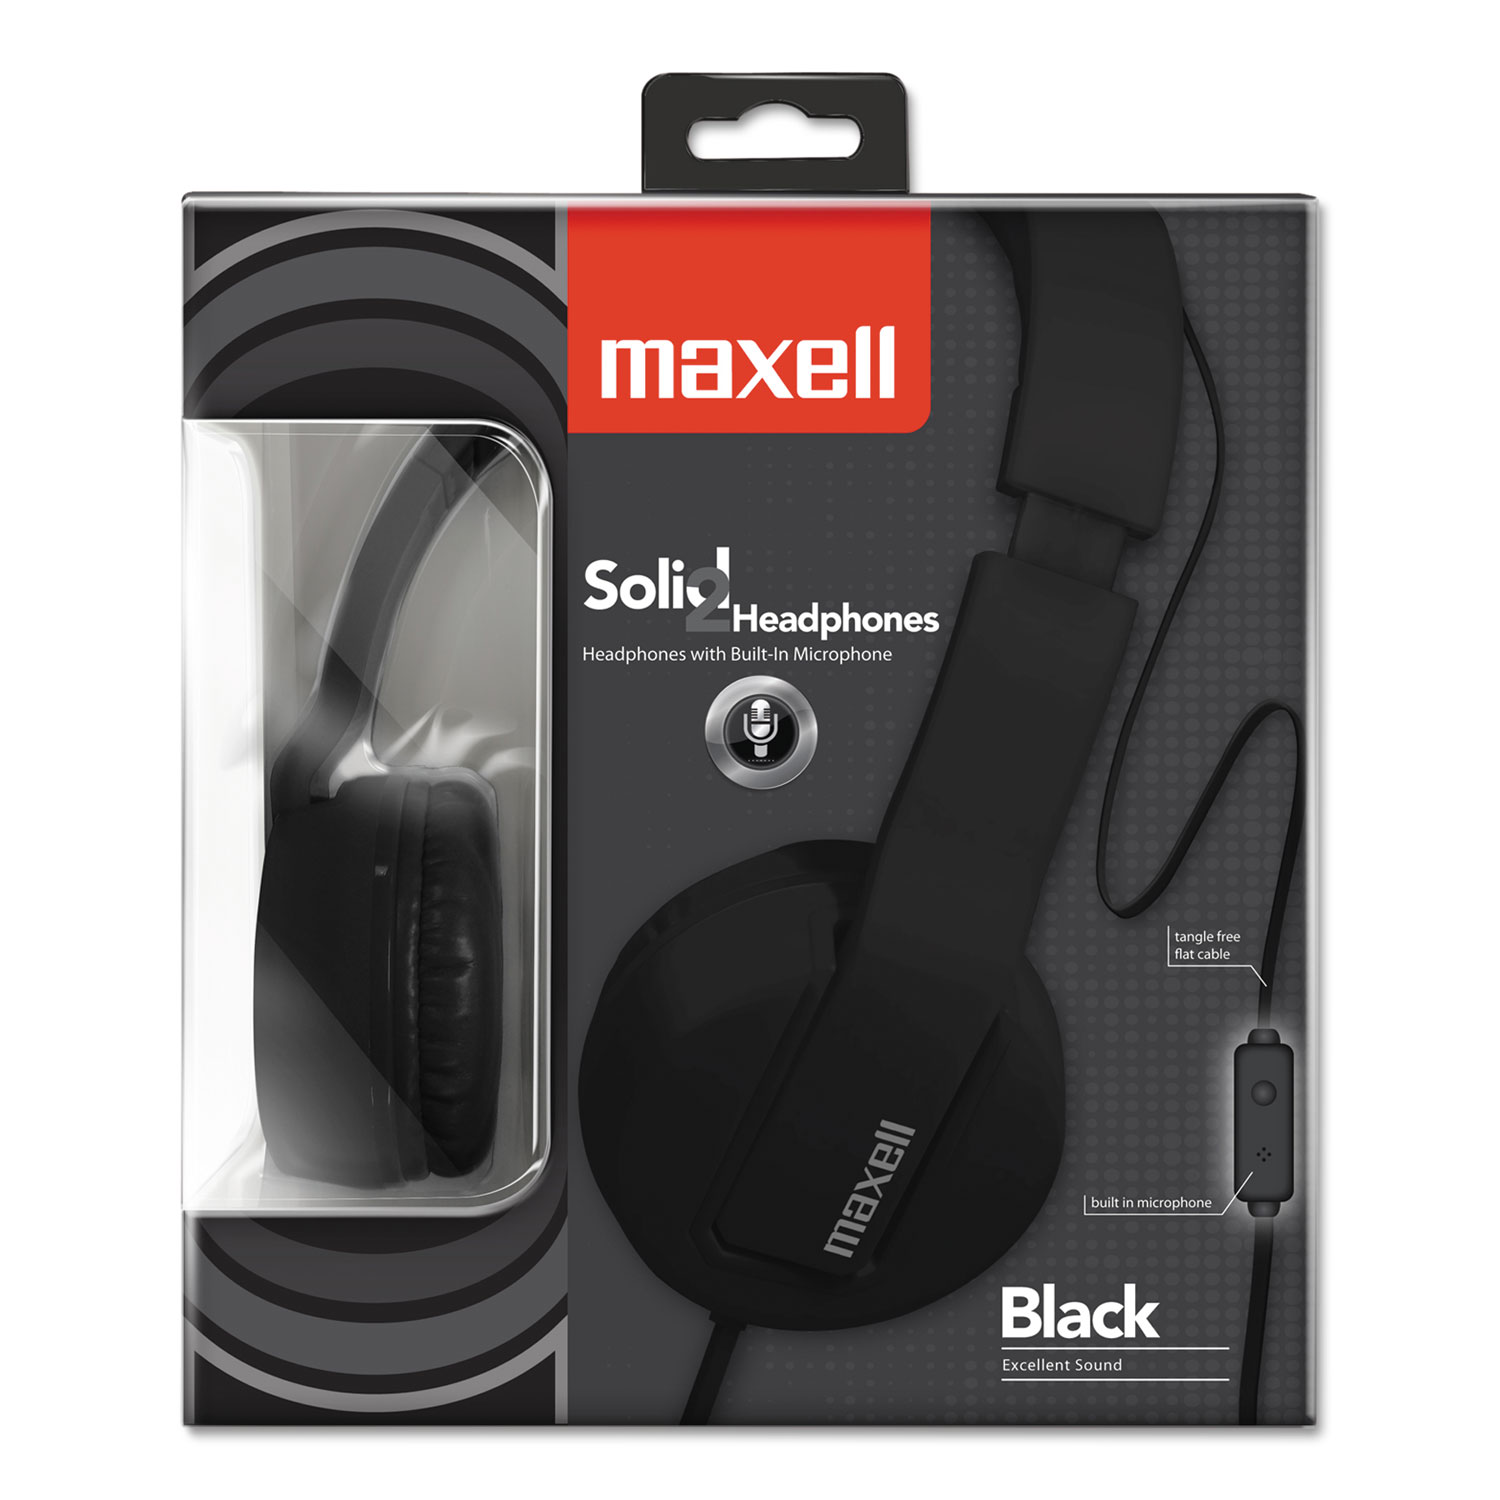  Maxell 290103 Solids Headphones, Black (MAX290103) 